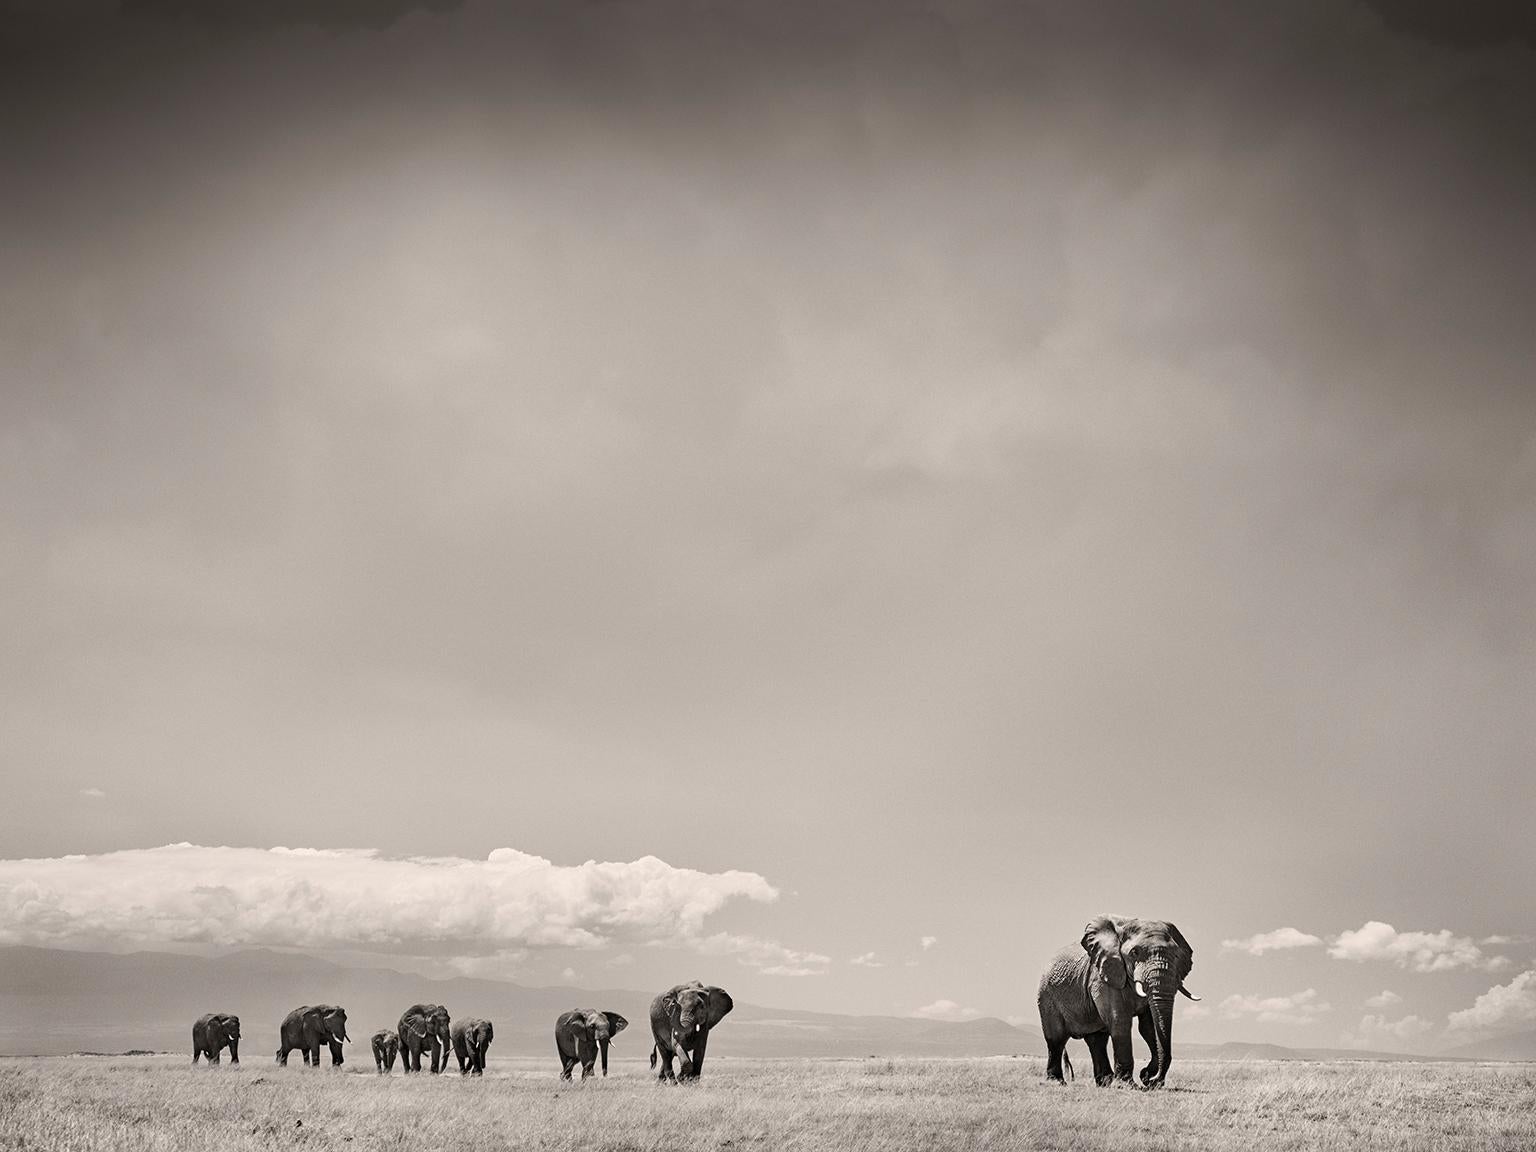 Joachim Schmeisser Landscape Photograph - The Matriarch, Elephant, animal, wildlife, black and white photography